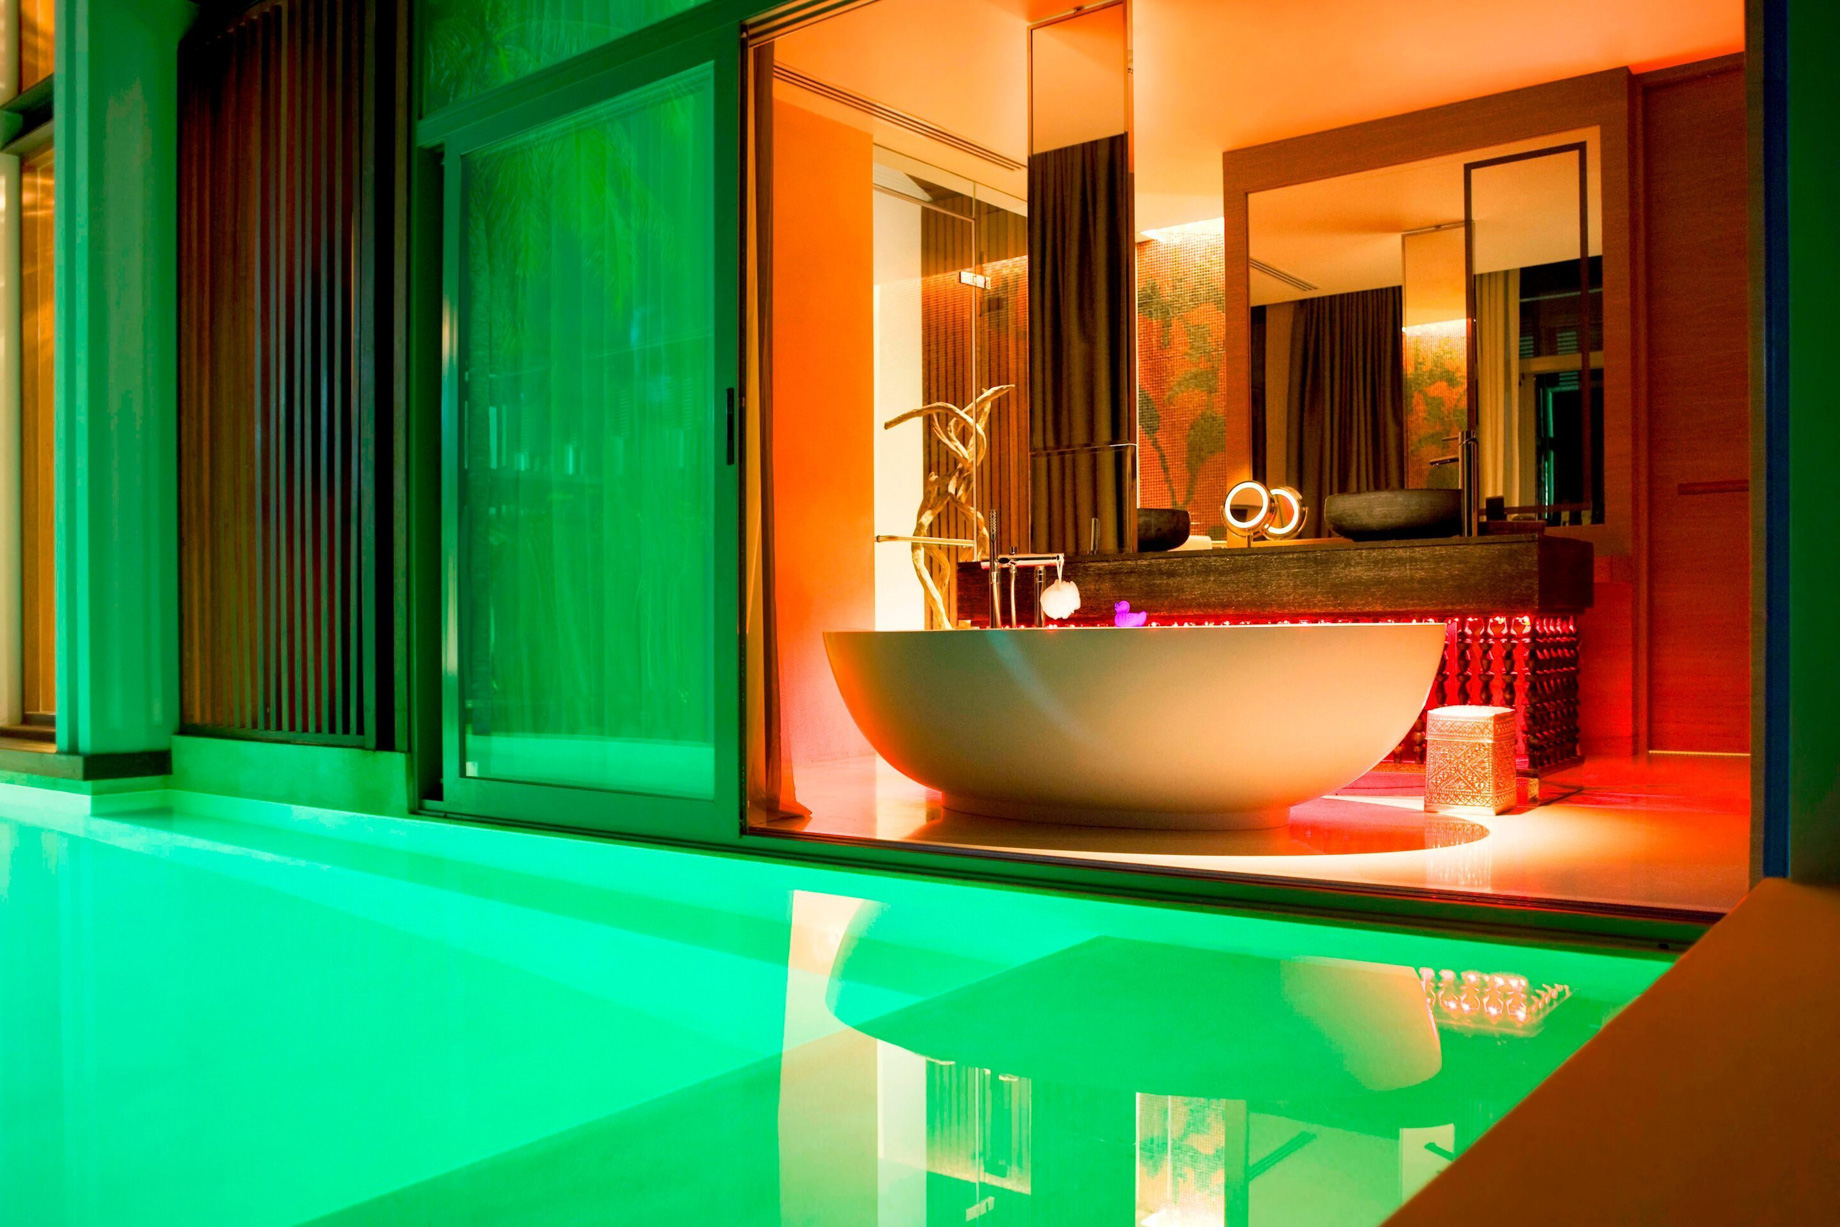 W Koh Samui Resort – Thailand – Villa Bathroom Freestanding Tub at Night